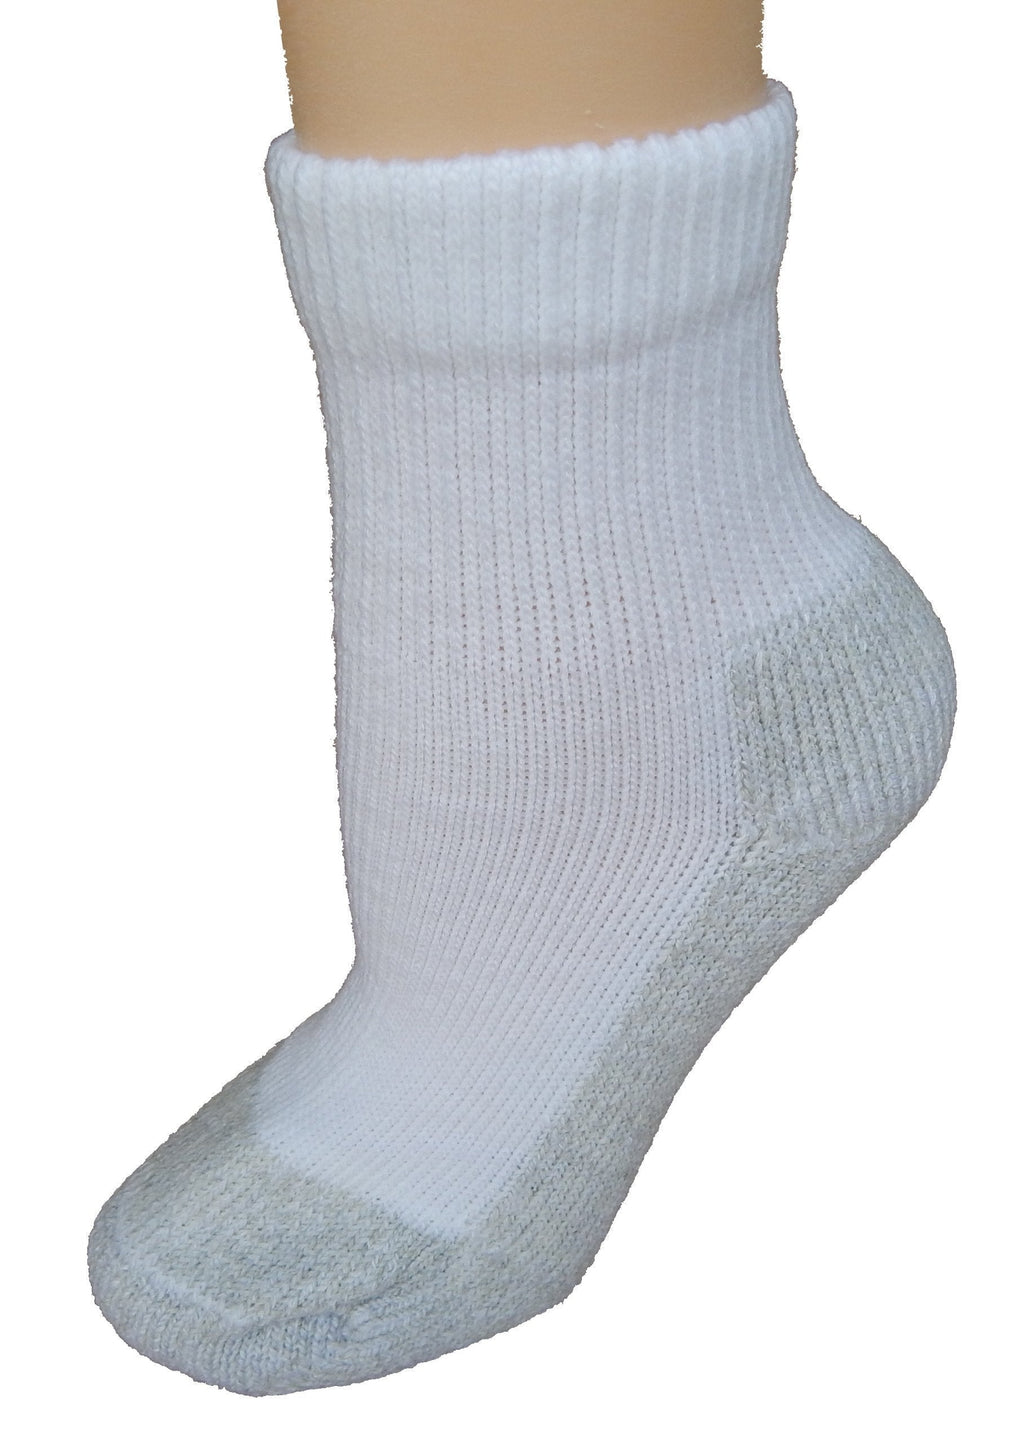 [AUSTRALIA] - Cushees Thick Ankle Socks, 3-pack Large 